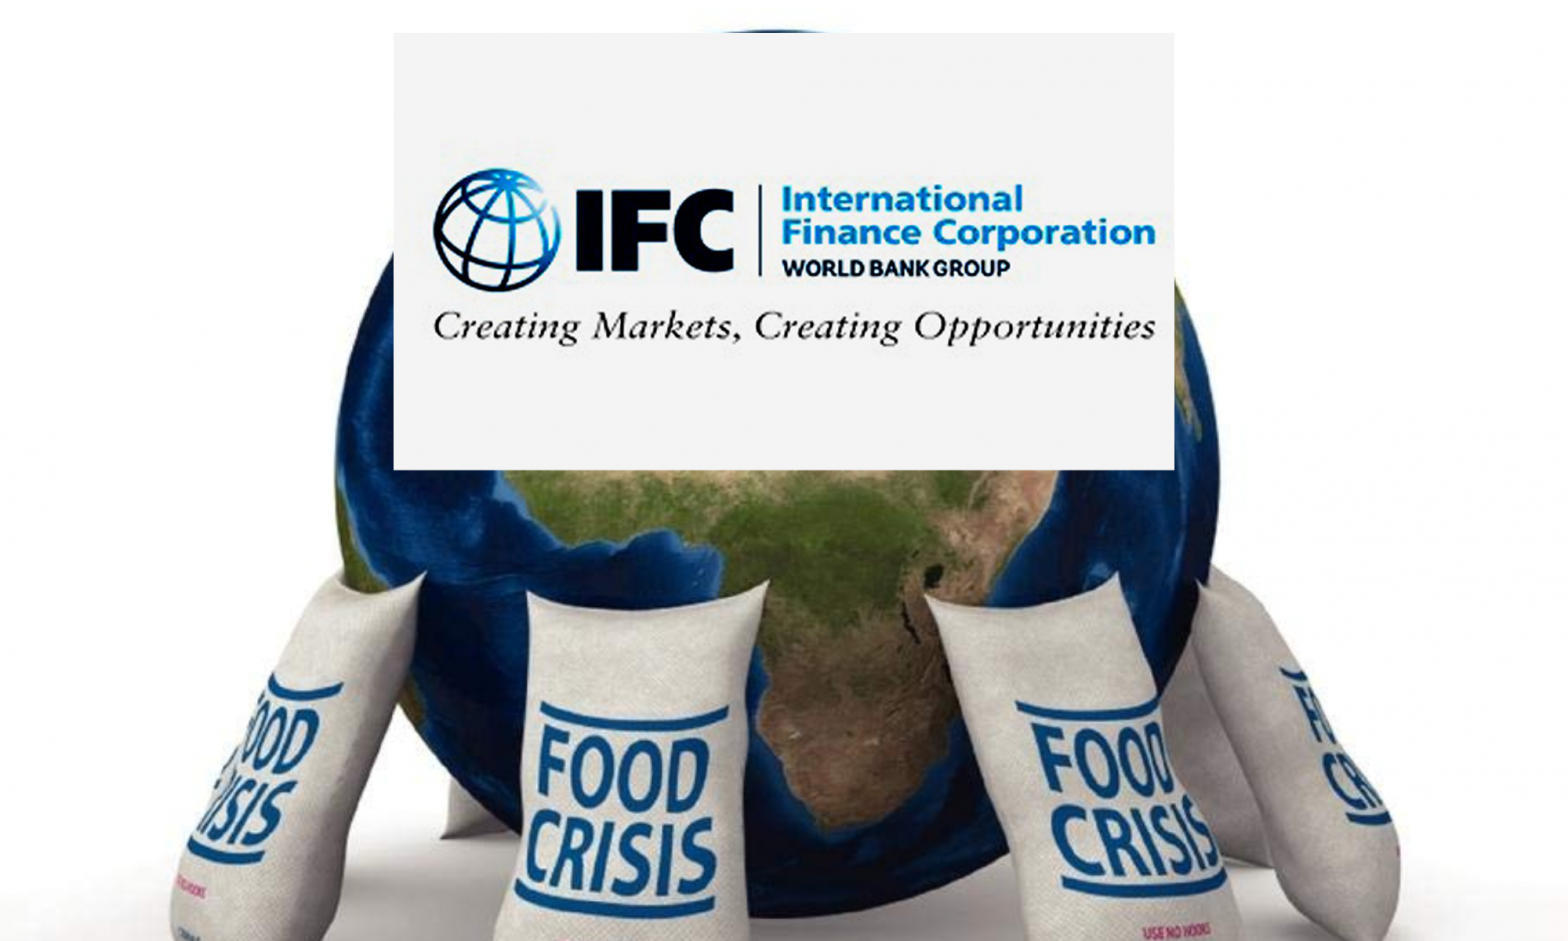 Financing Platform Launched by IFC (International Finance Corporation)